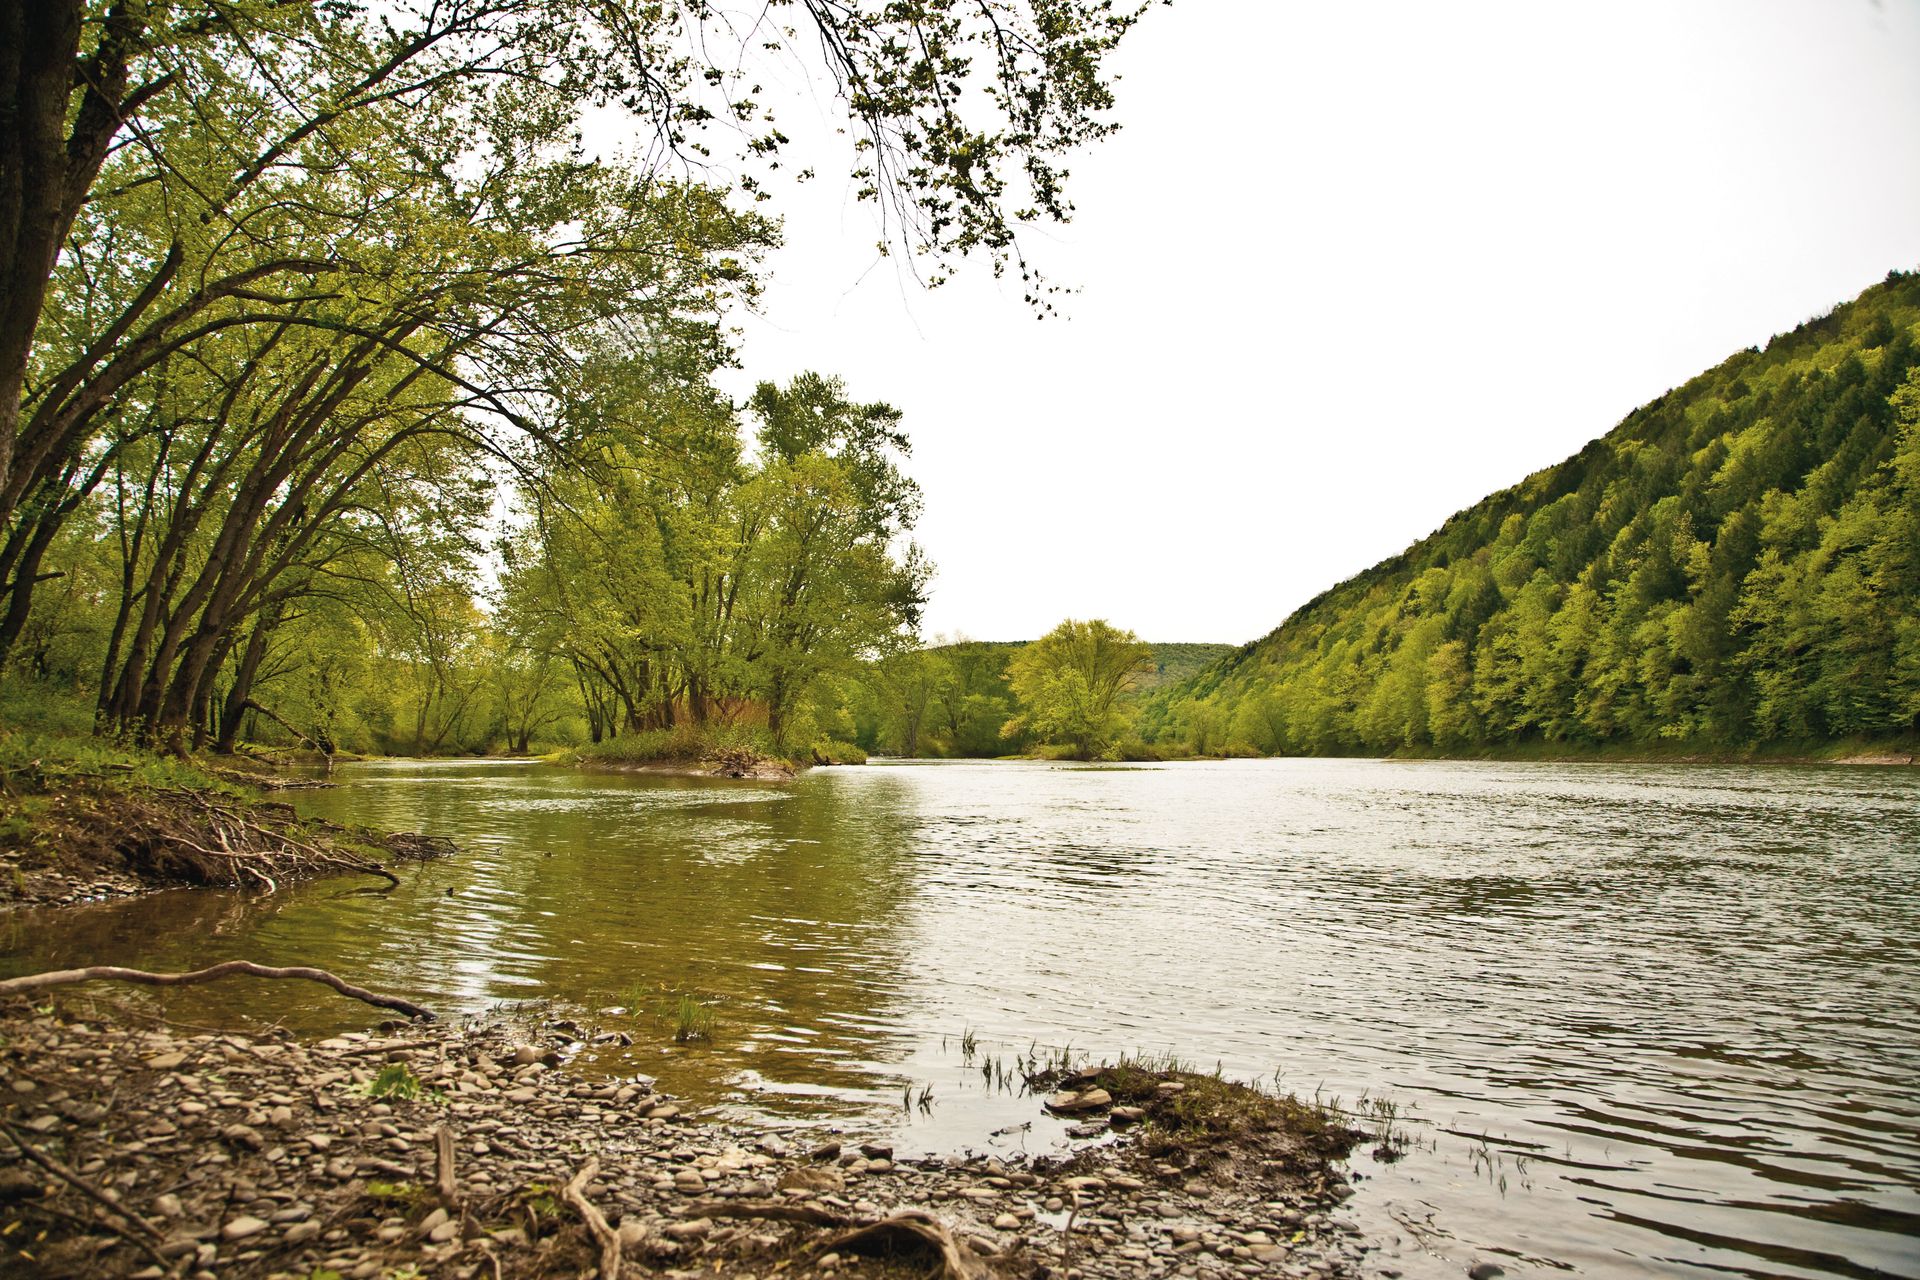 The Susquehanna River in Harmony, Pennsylvania.